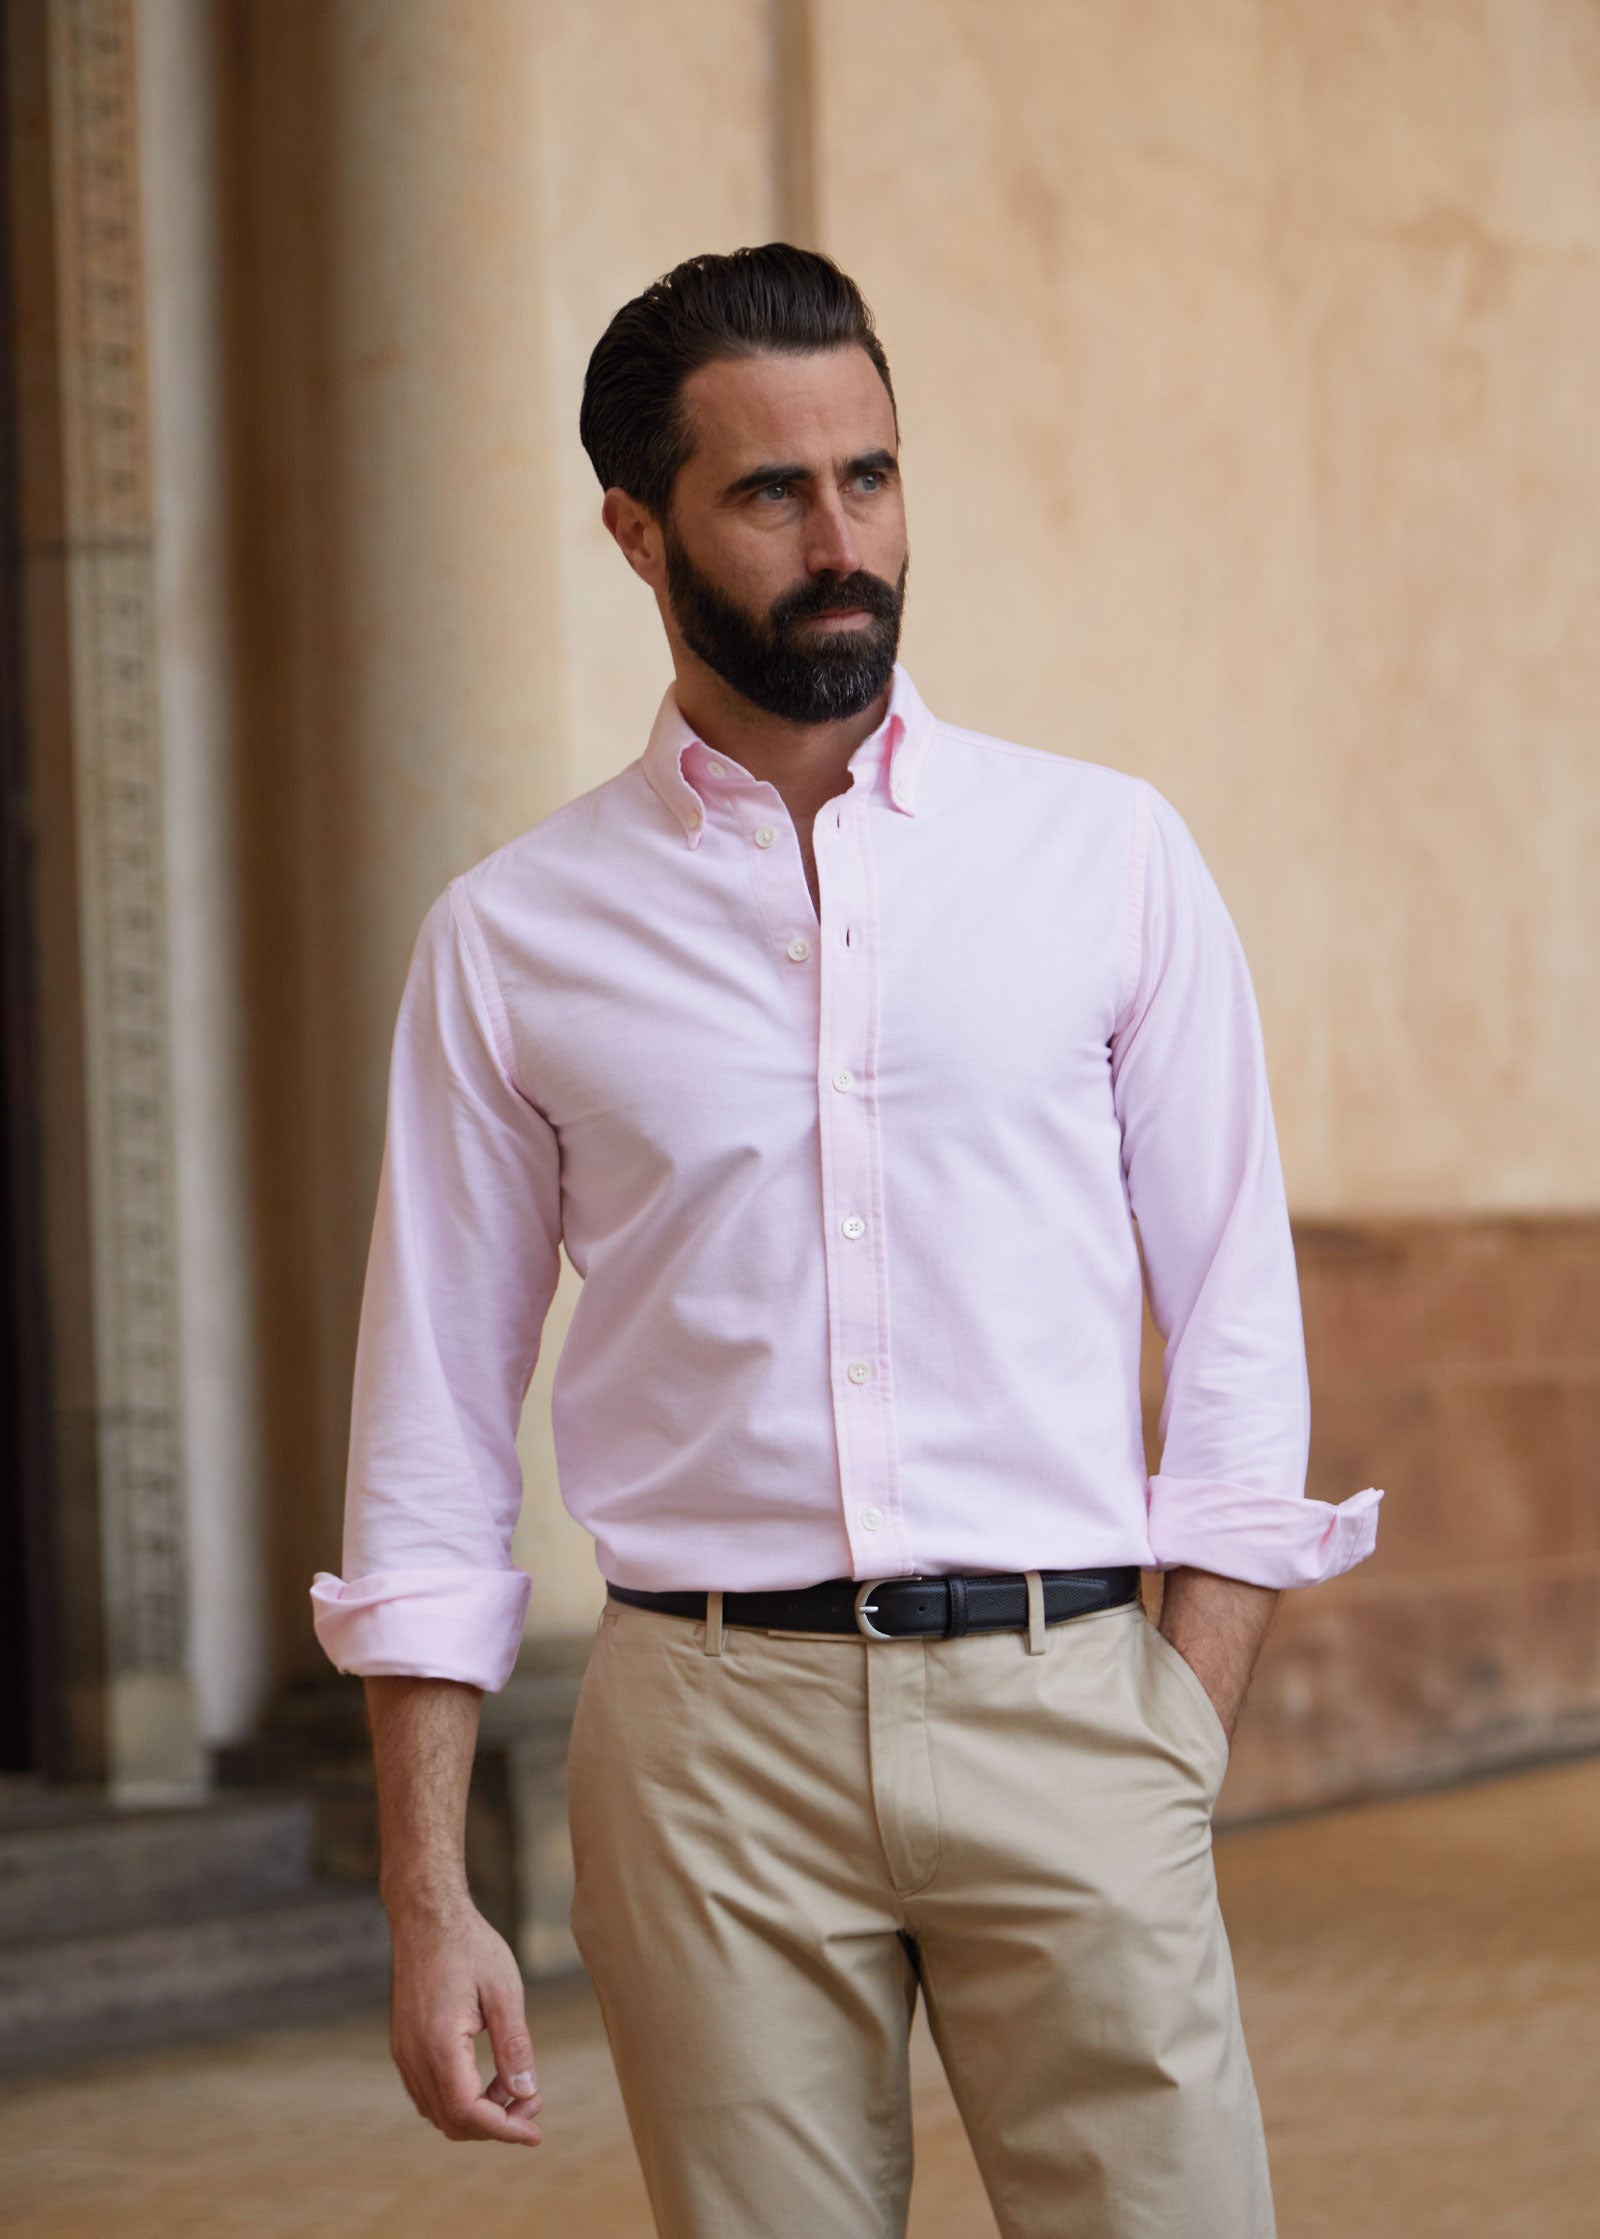 Appearance-An-Ivy-Oxford-Skjorte-Shirt-Herre-Herretoej-Toej-Maend-Men-Oekologisk-Organic-Bright-Pink-Lyseroed